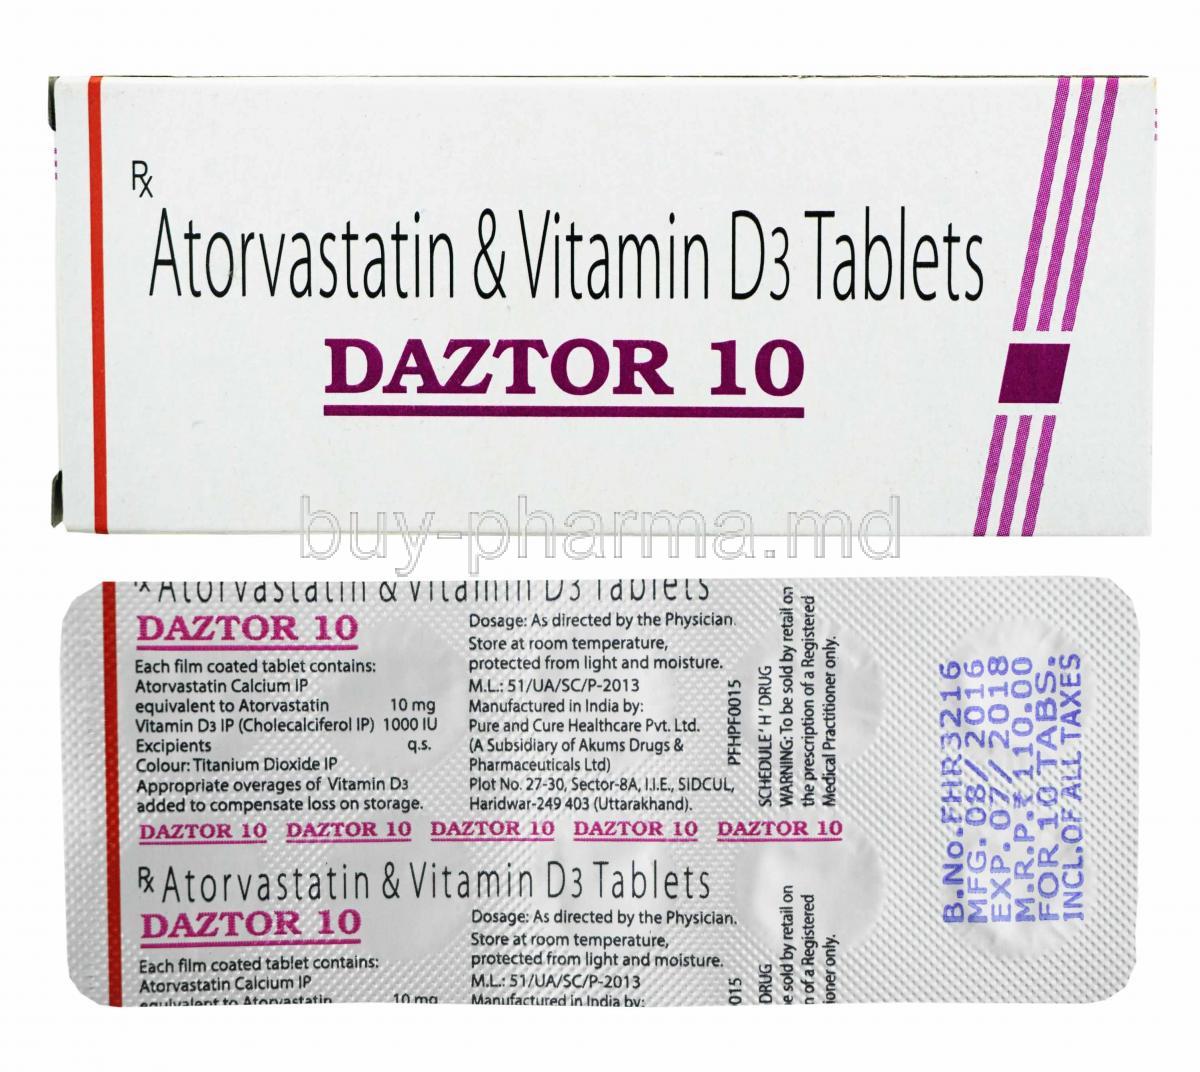 Daztor, Atorvastatin 10mg and Vitamin D3 1000IU box and tablets